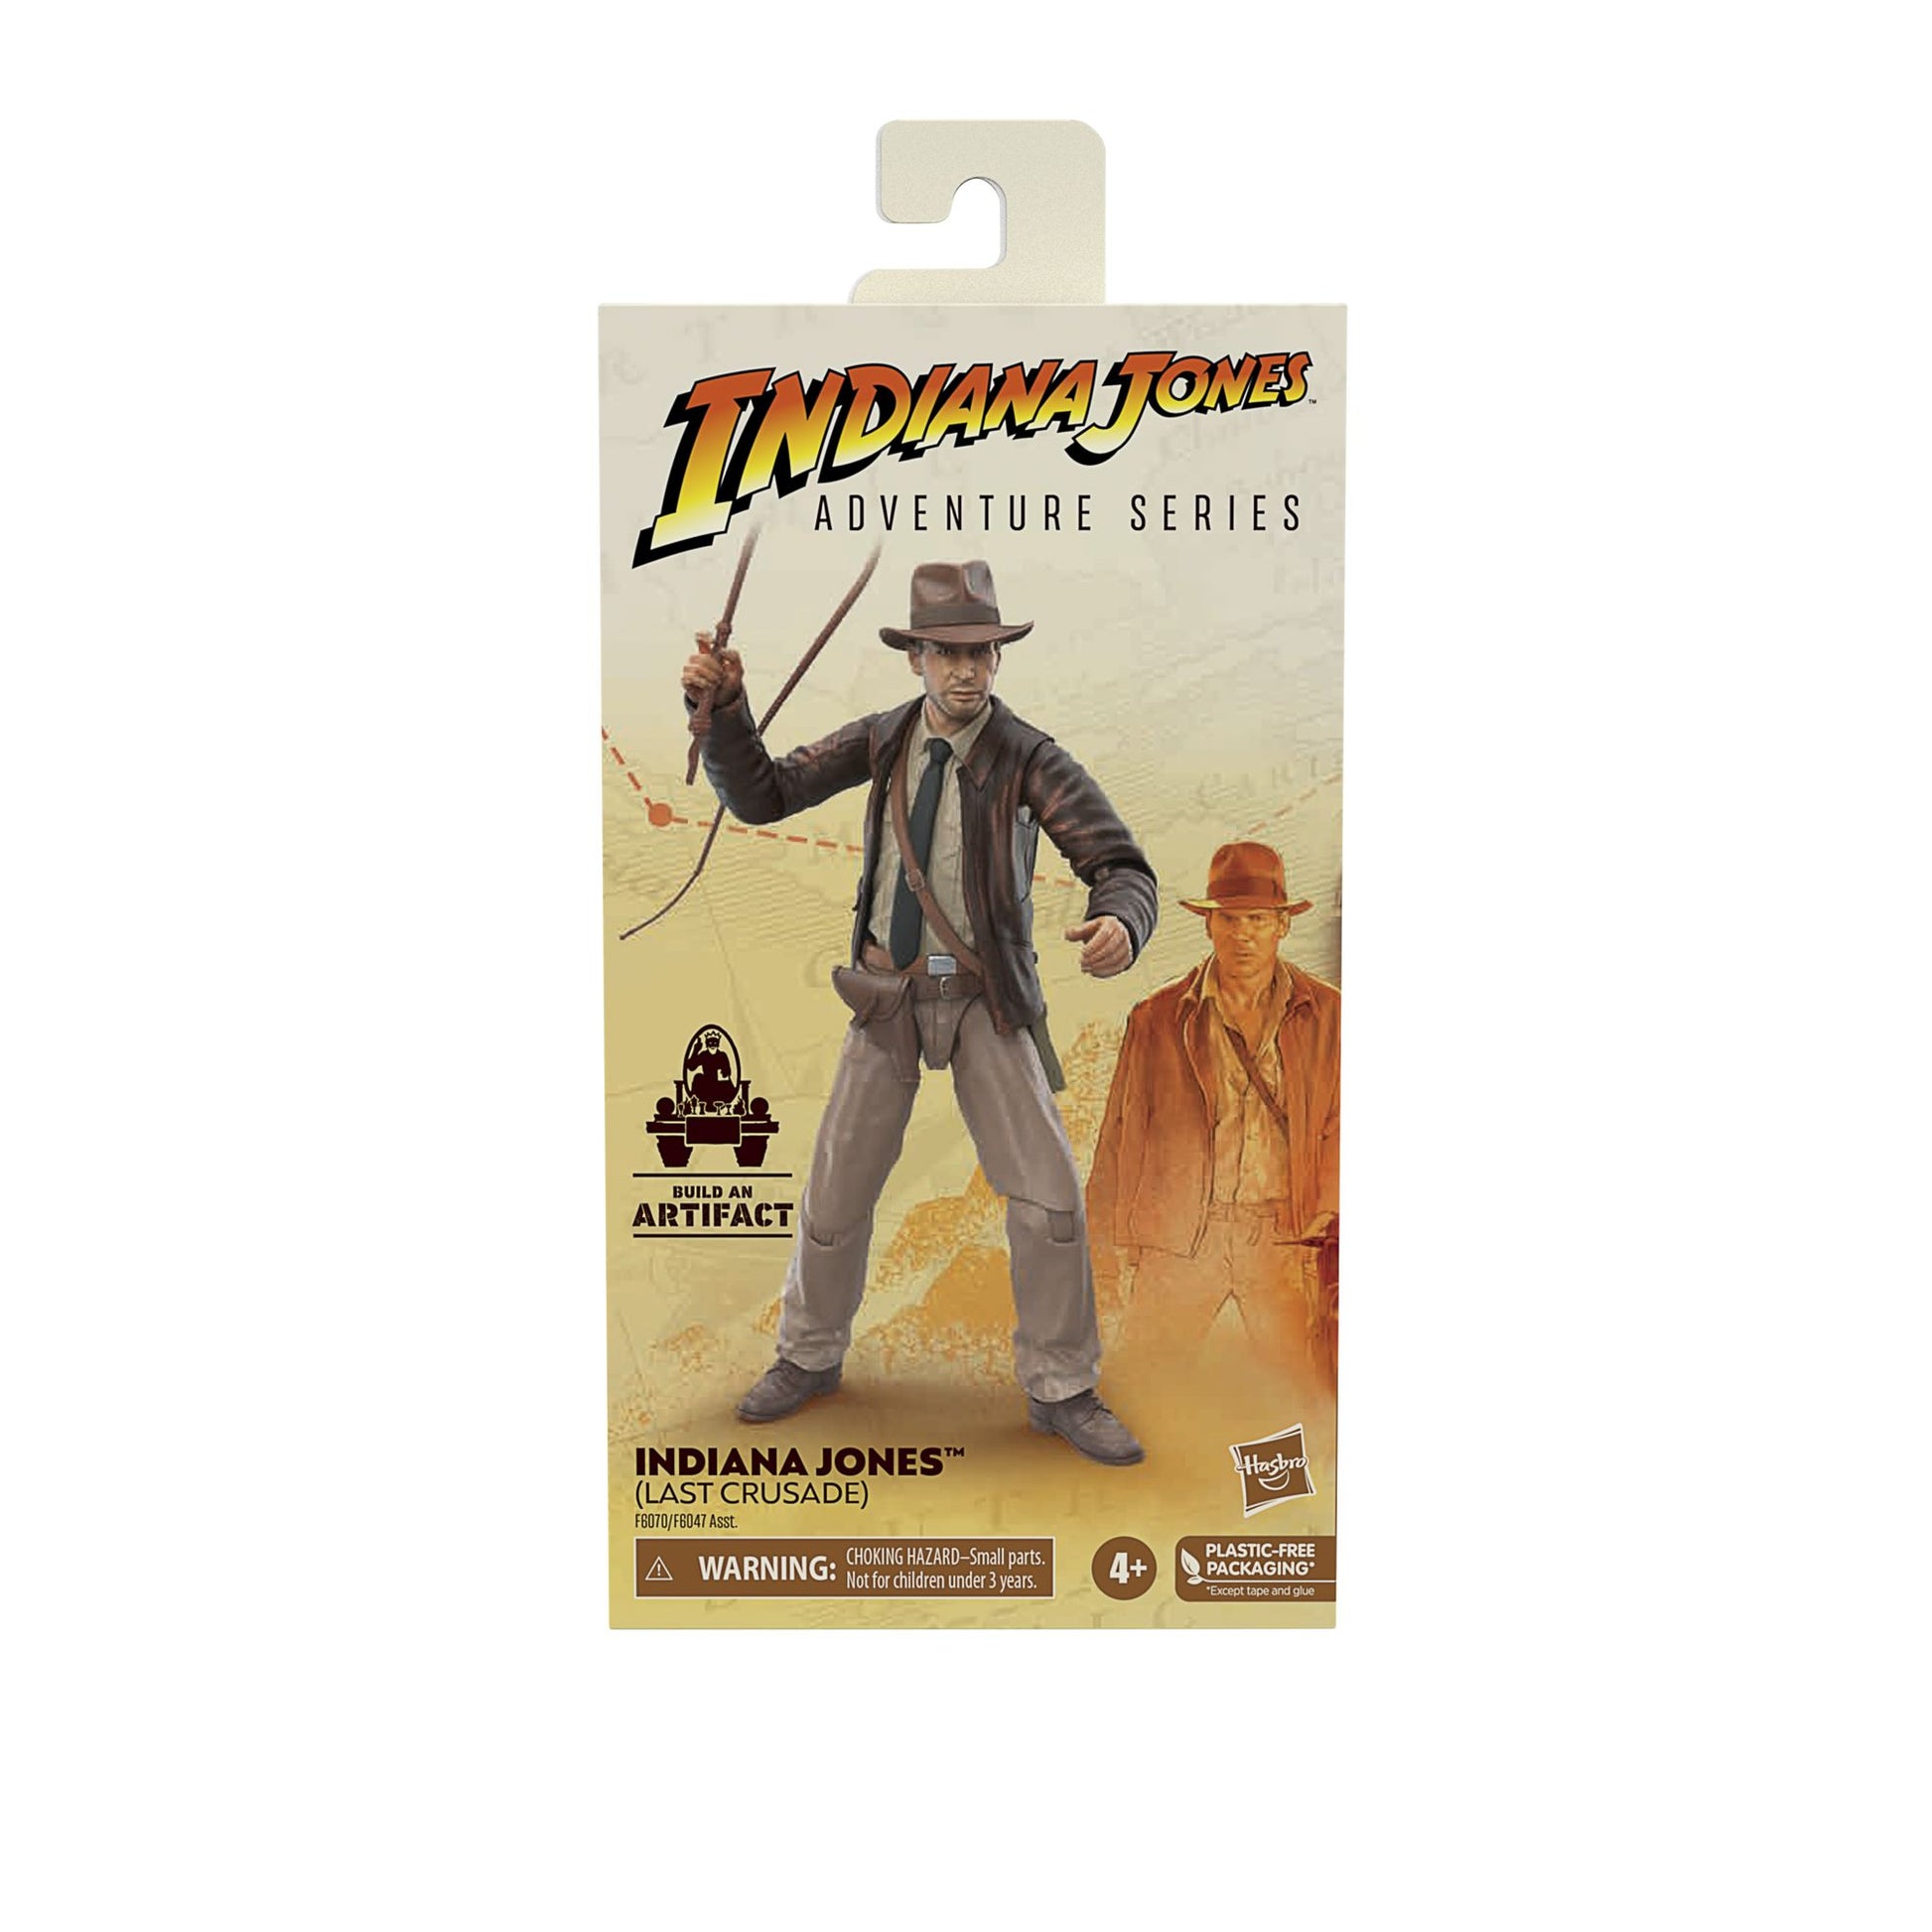 Indiana Jones Adventure Series Indiana Jones (Last Crusade) - Heretoserveyou